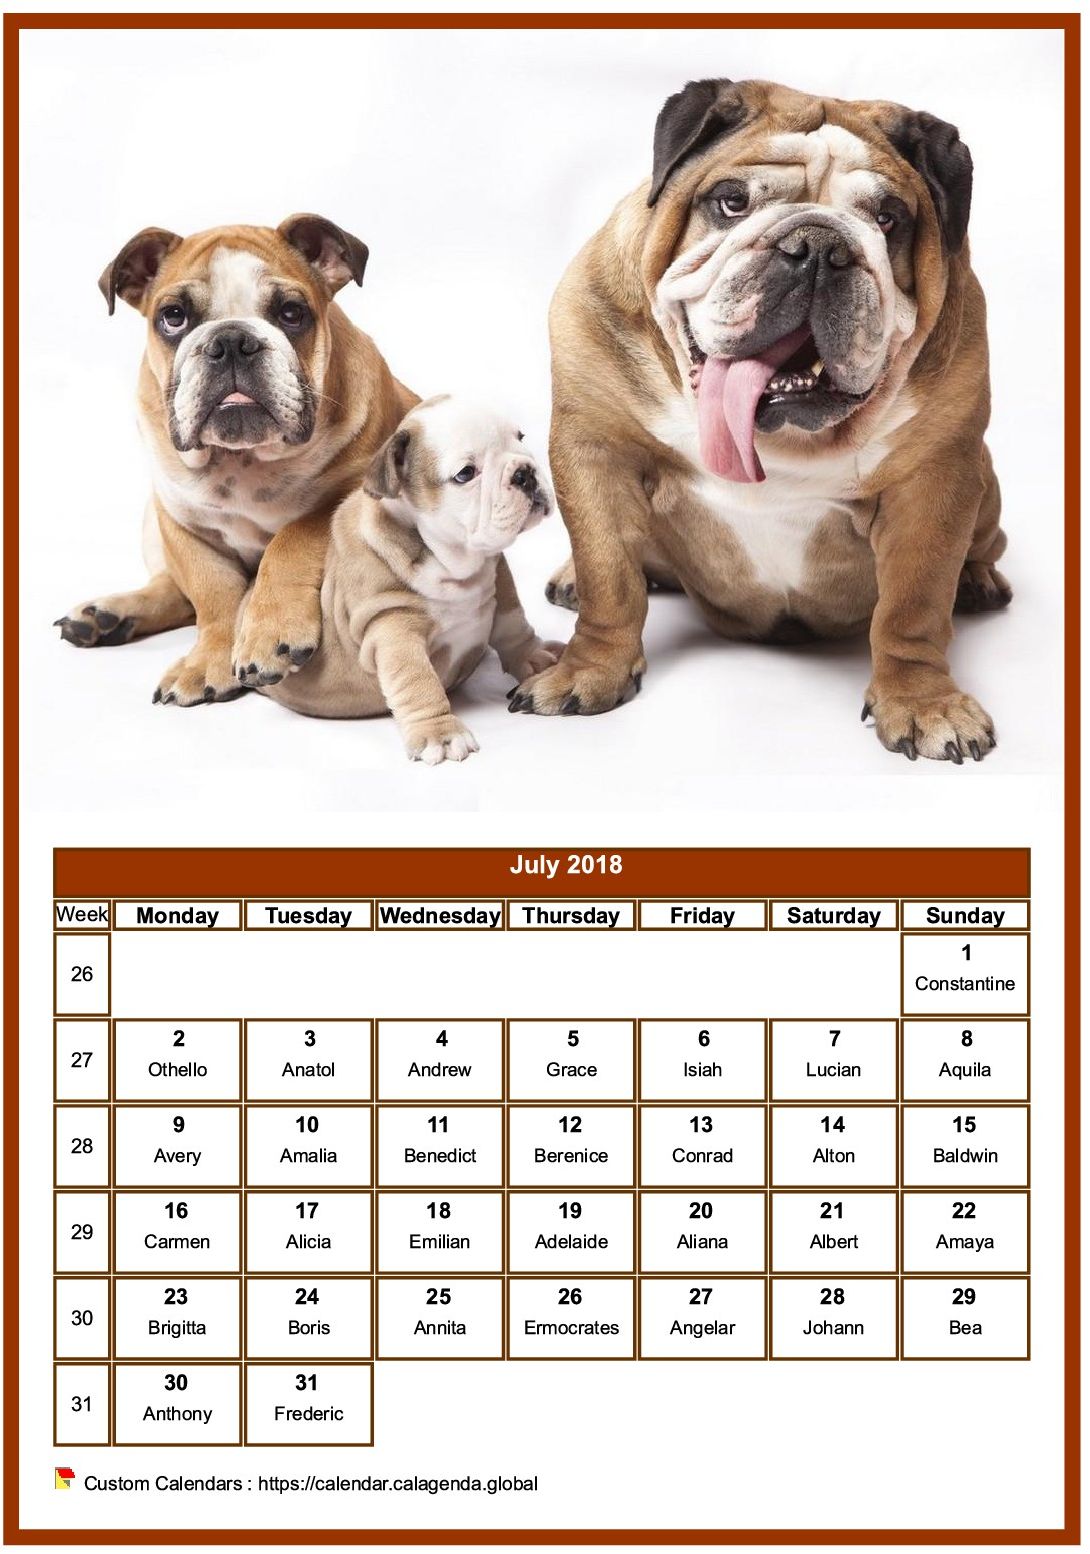 Calendar July 2018 dogs